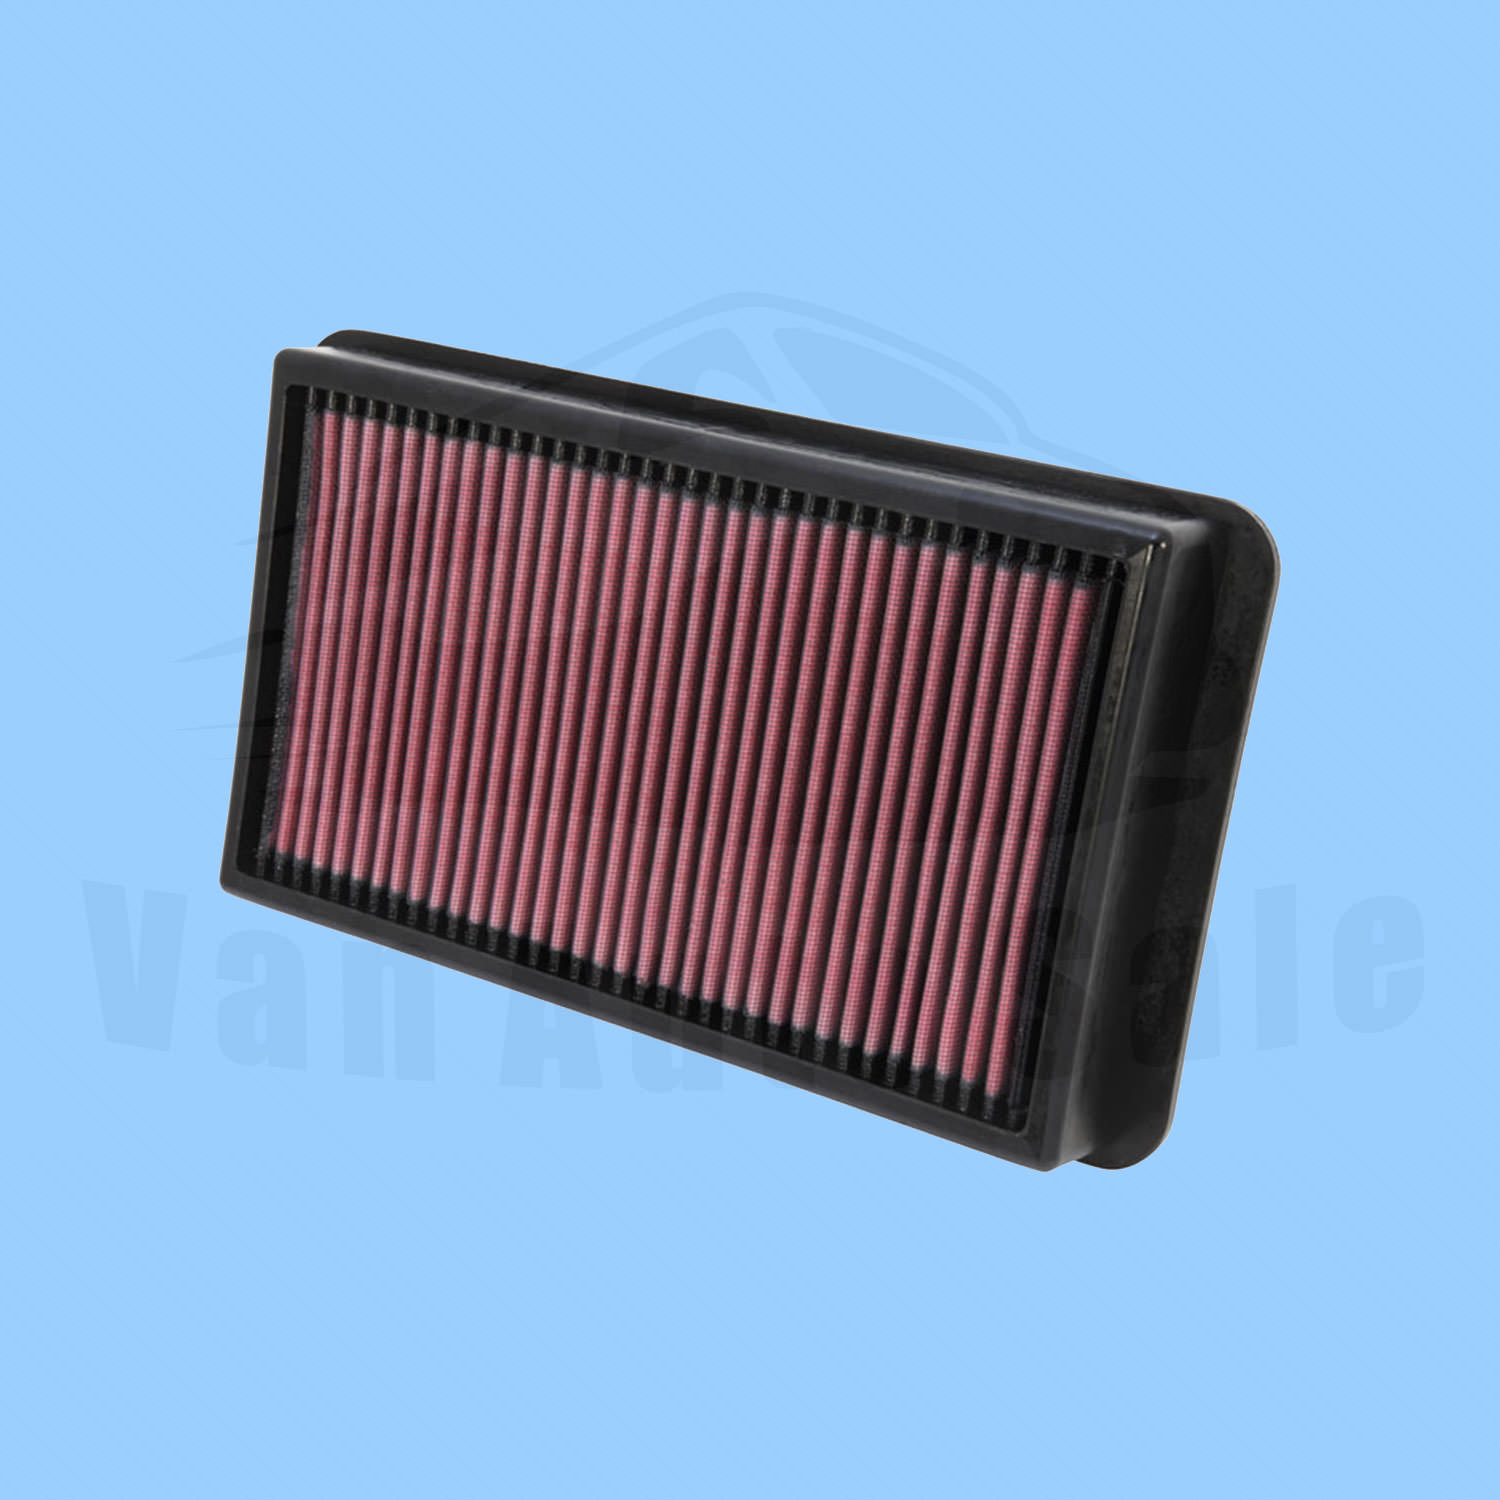 lrfvs3006d air filter replacement